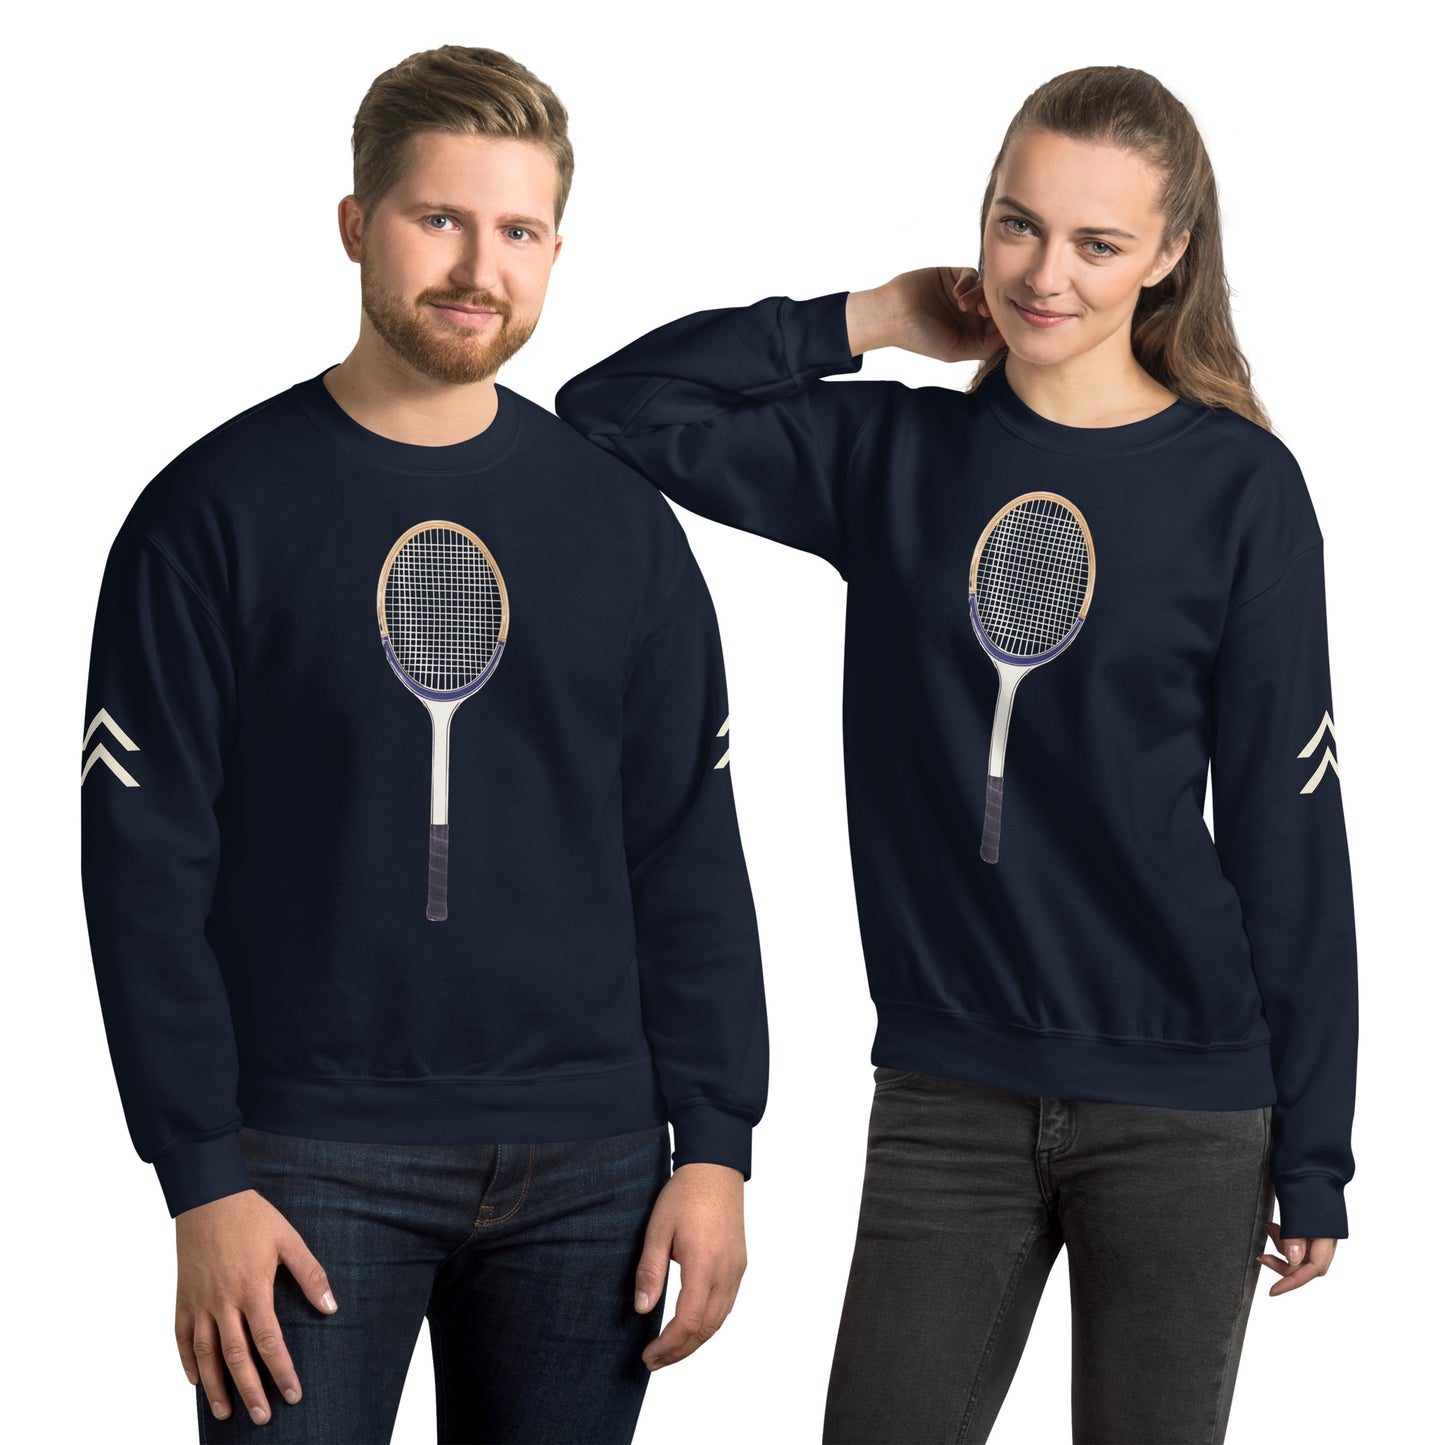 Classic Tennis Racket Crewneck Sweatshirt